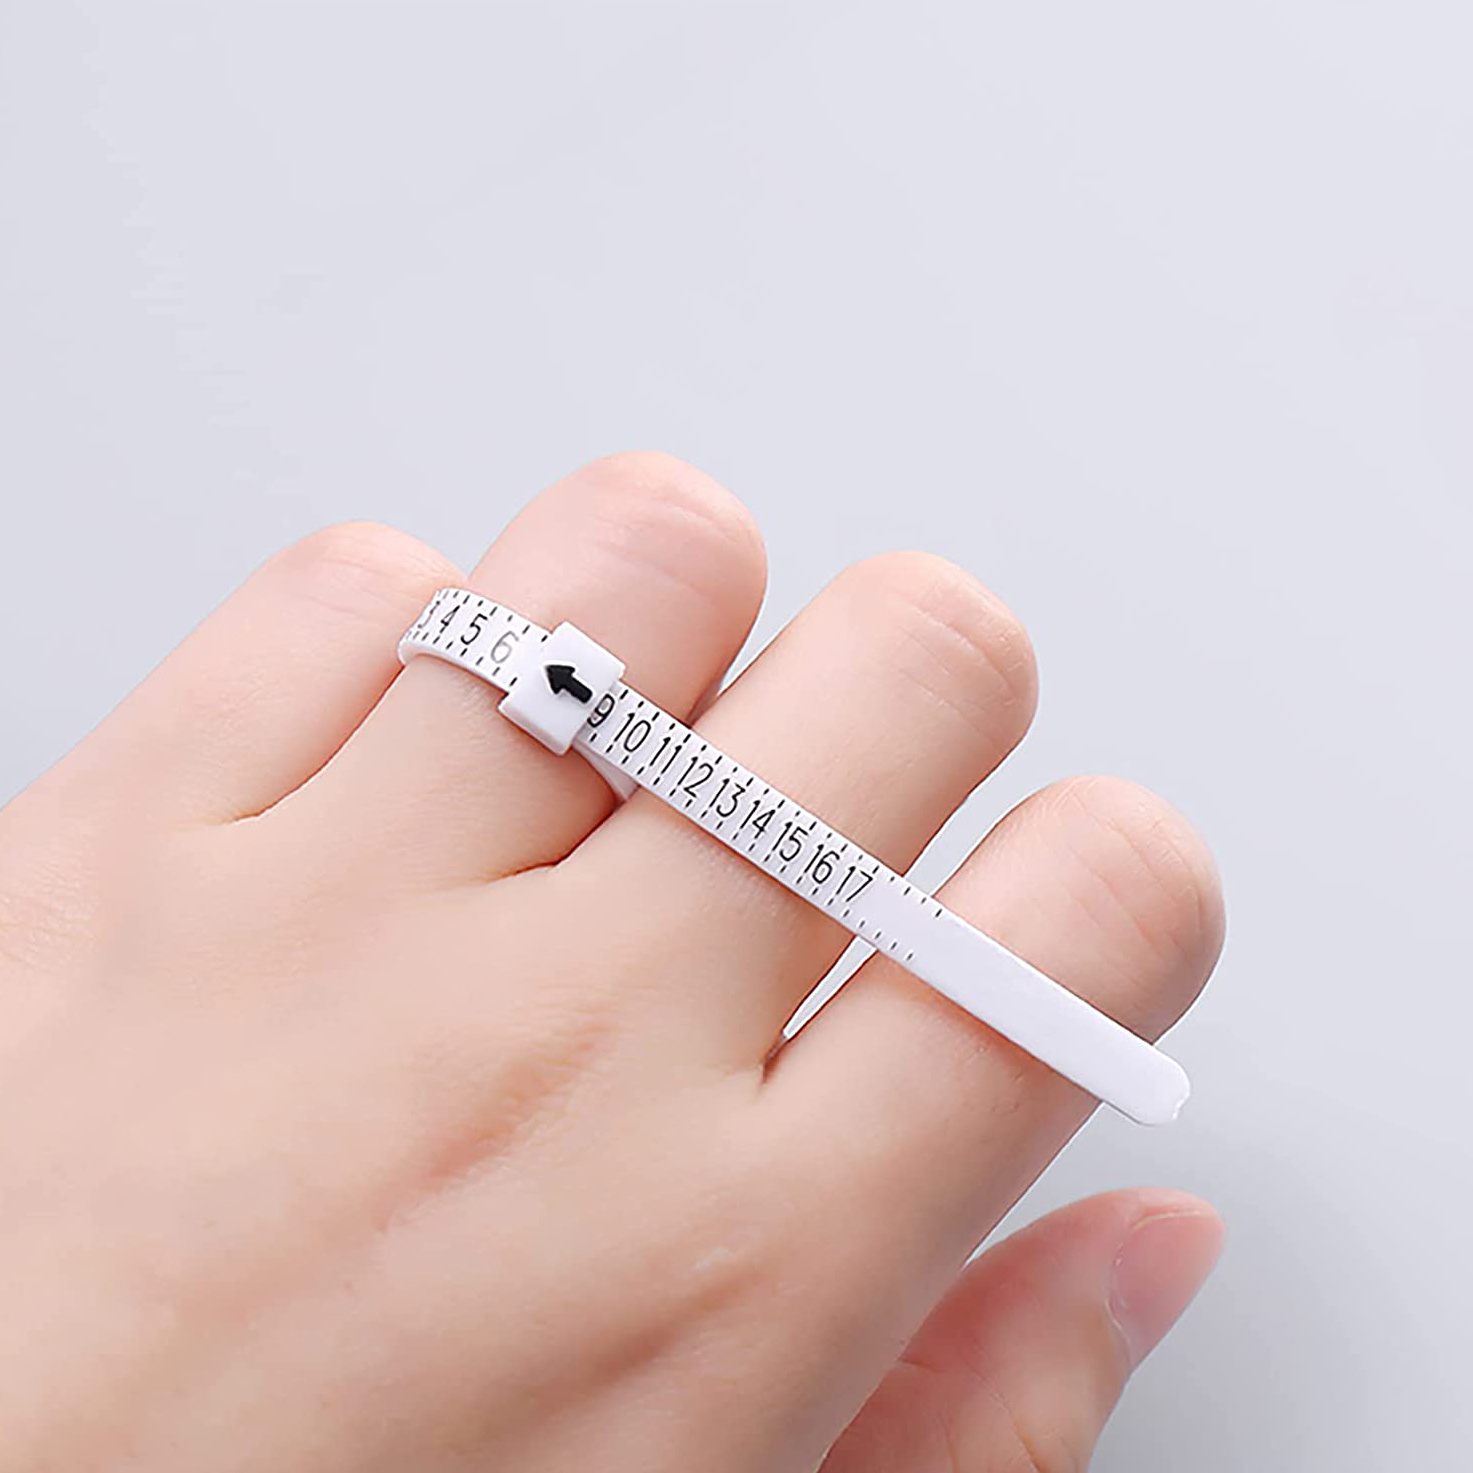 reusable plastic ring sizer - multisizer, measuring tool, finger